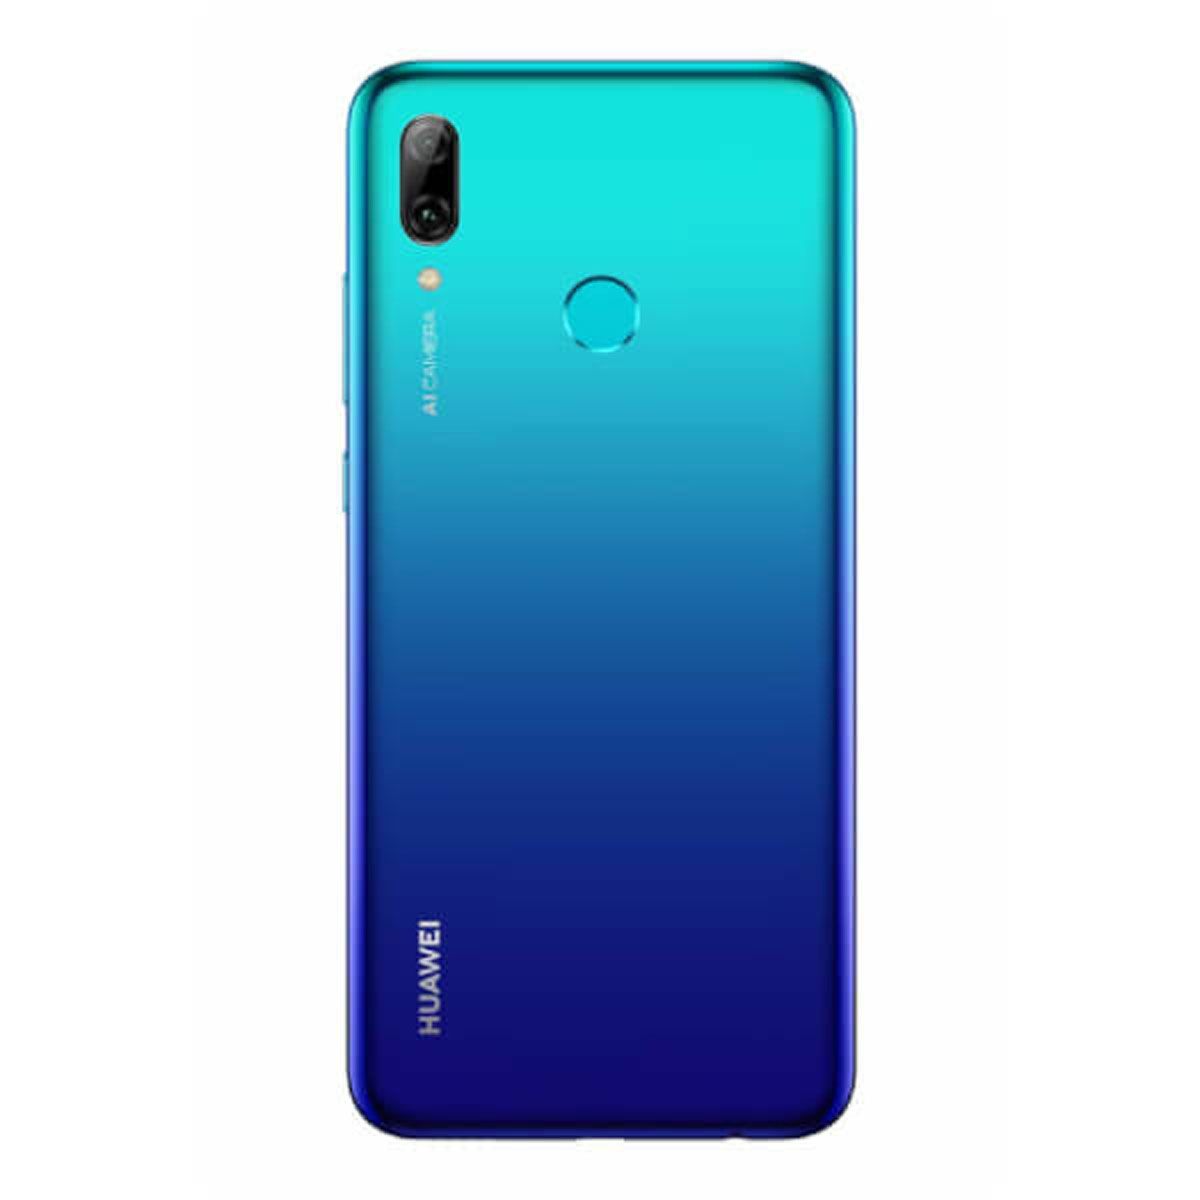 Huawei P Smart (2019) 3GB/64GB Azul (Aurora Blue) Single SIM